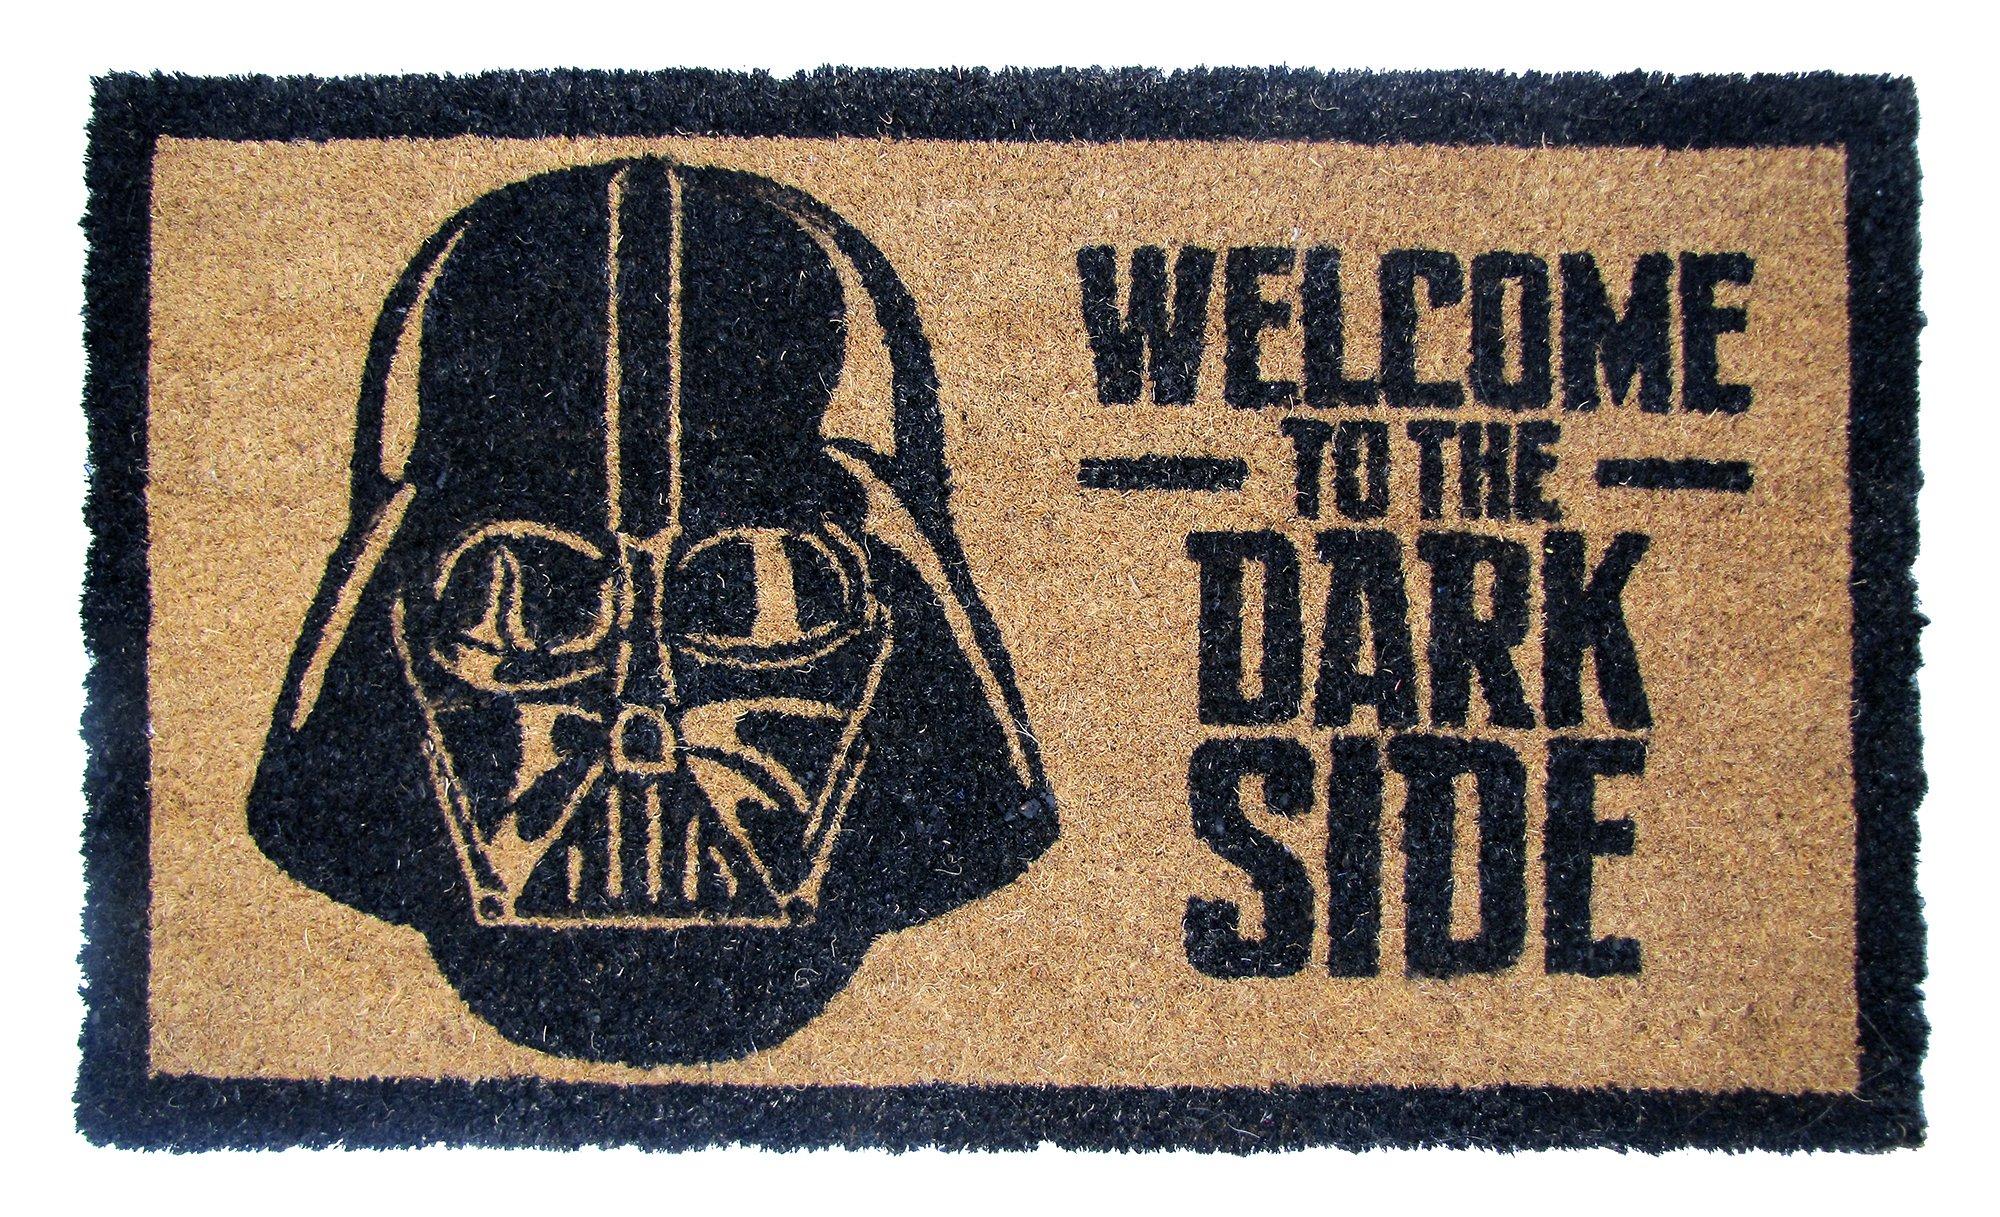 Star Wars Darth Vader Welcome To The Dark Side Doormat Gamestop - roblox star wars music codes gaming blue lighting video